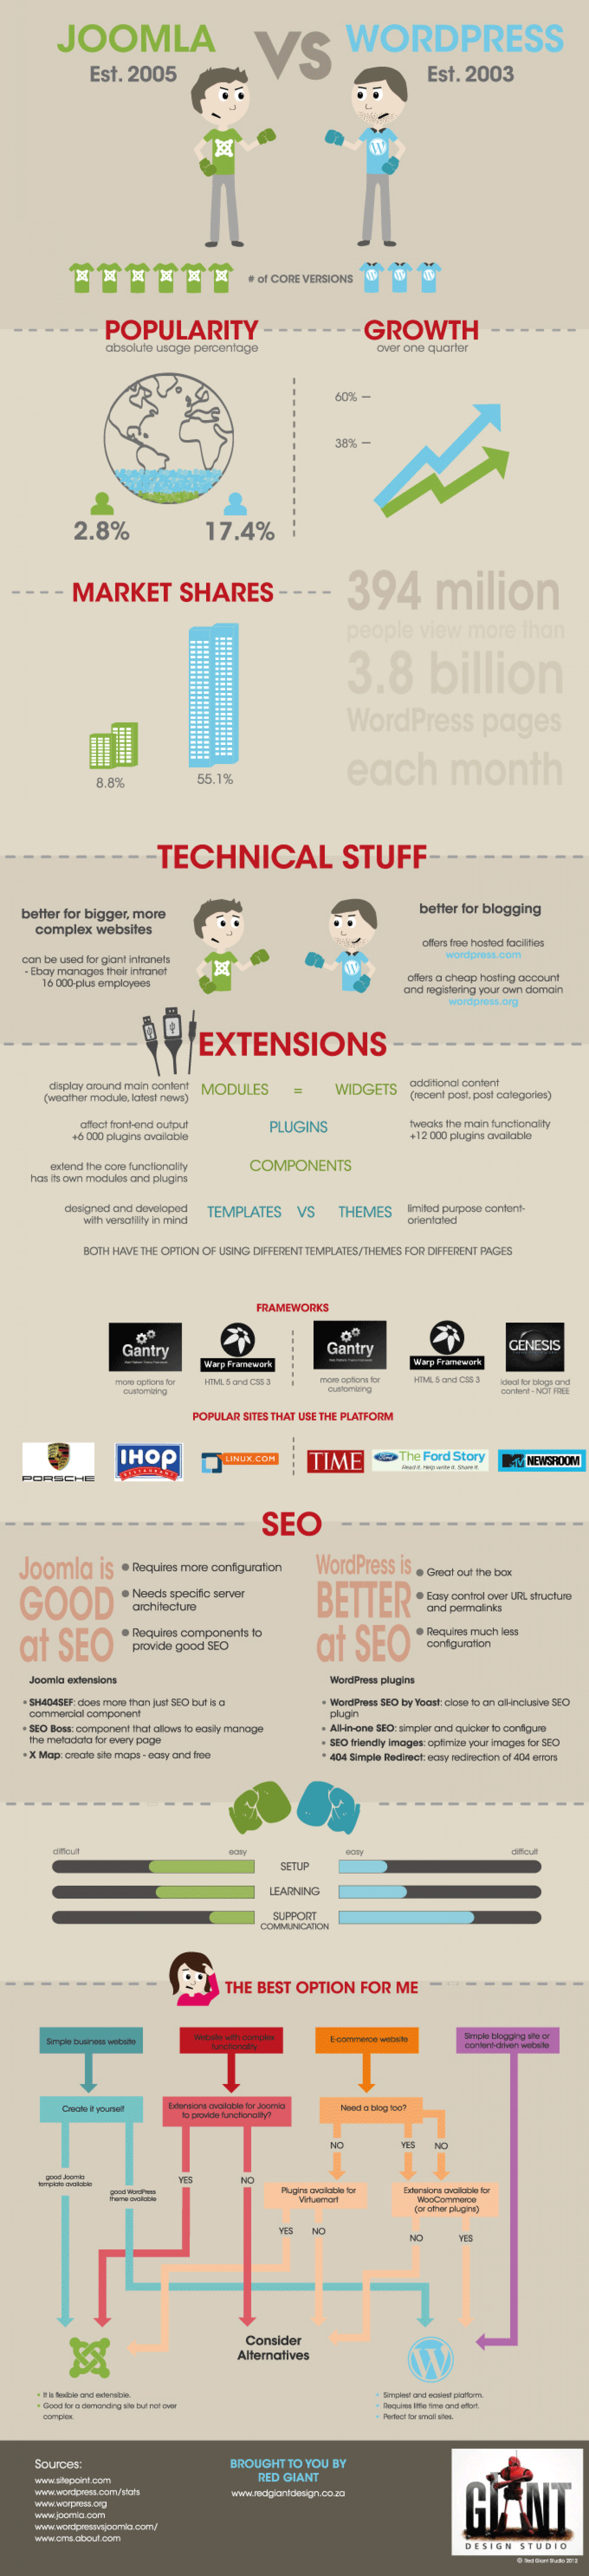 Difference Between Wordpress and Joomla Infographic